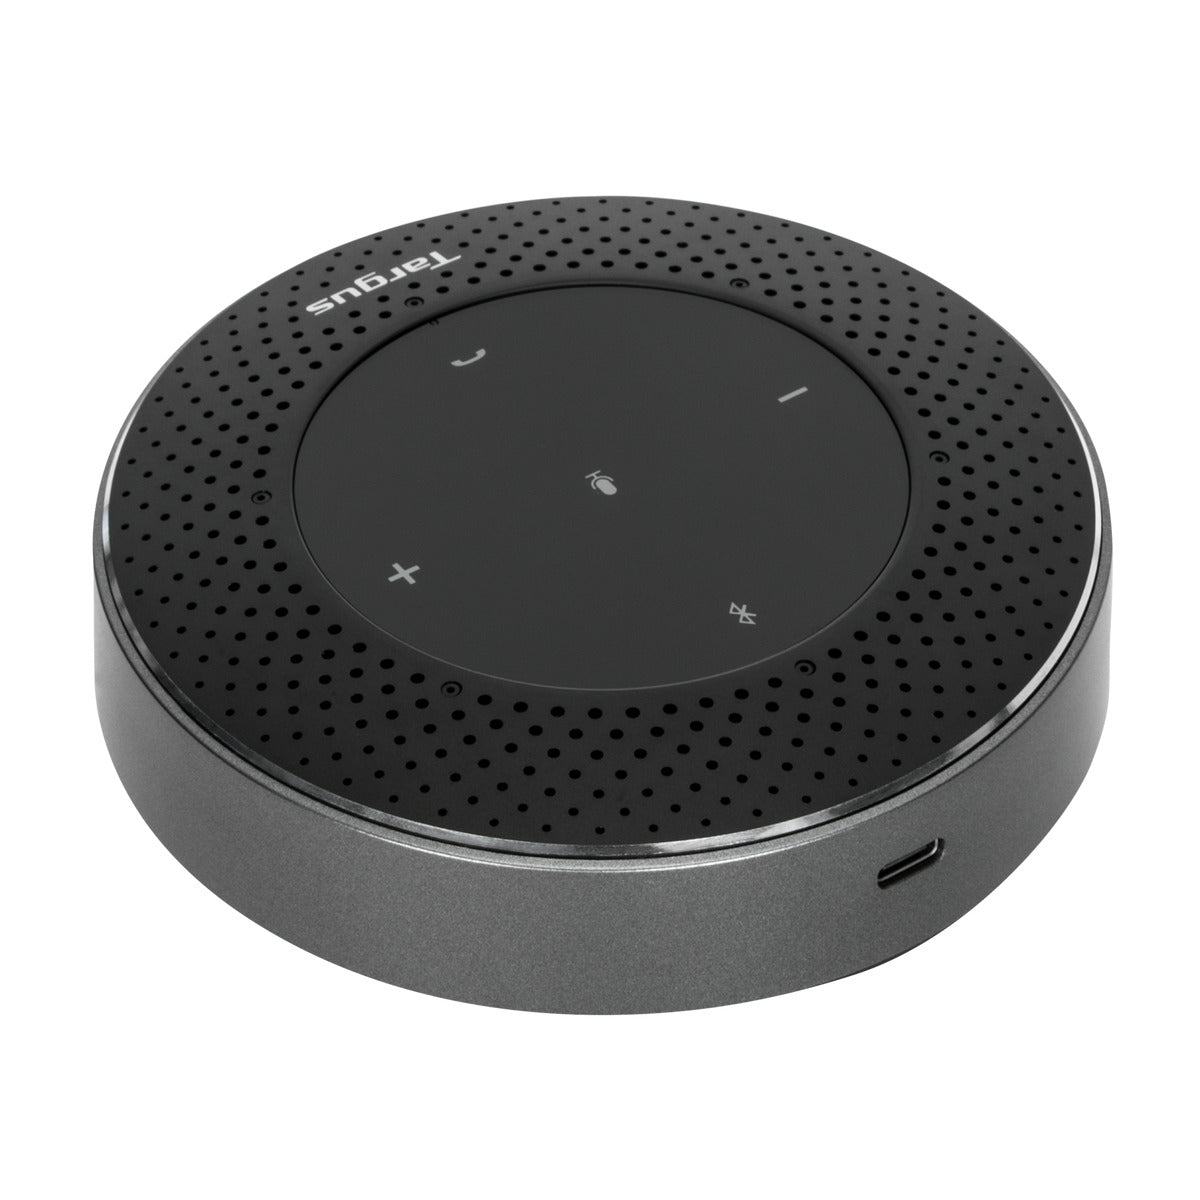 Targus Noise-cancellation Bluetooth Mobile Speakerphone 會議專用收音揚聲器